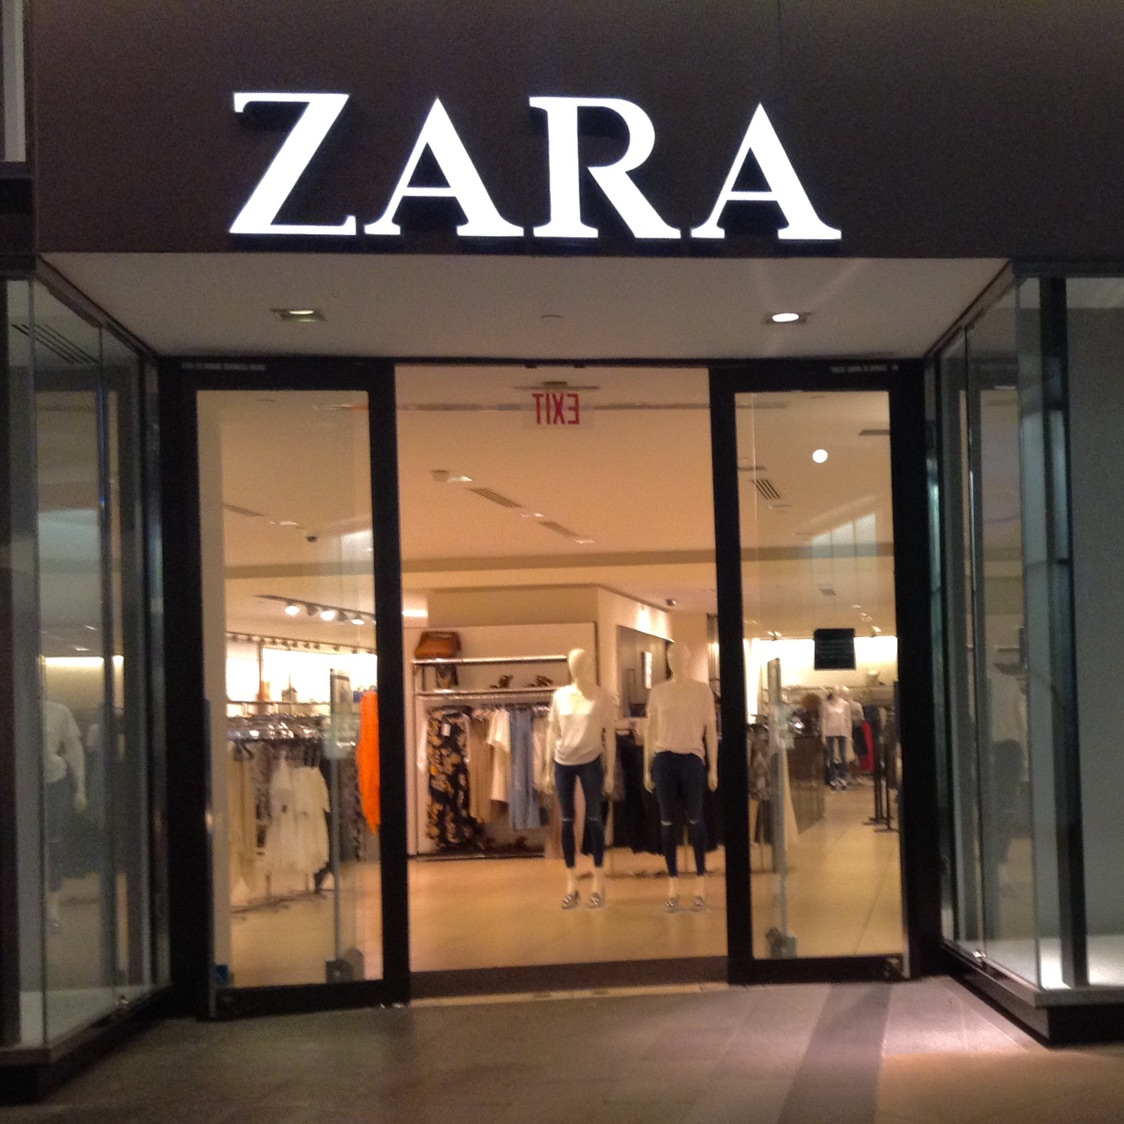 Zara -get ready for Winter Season!